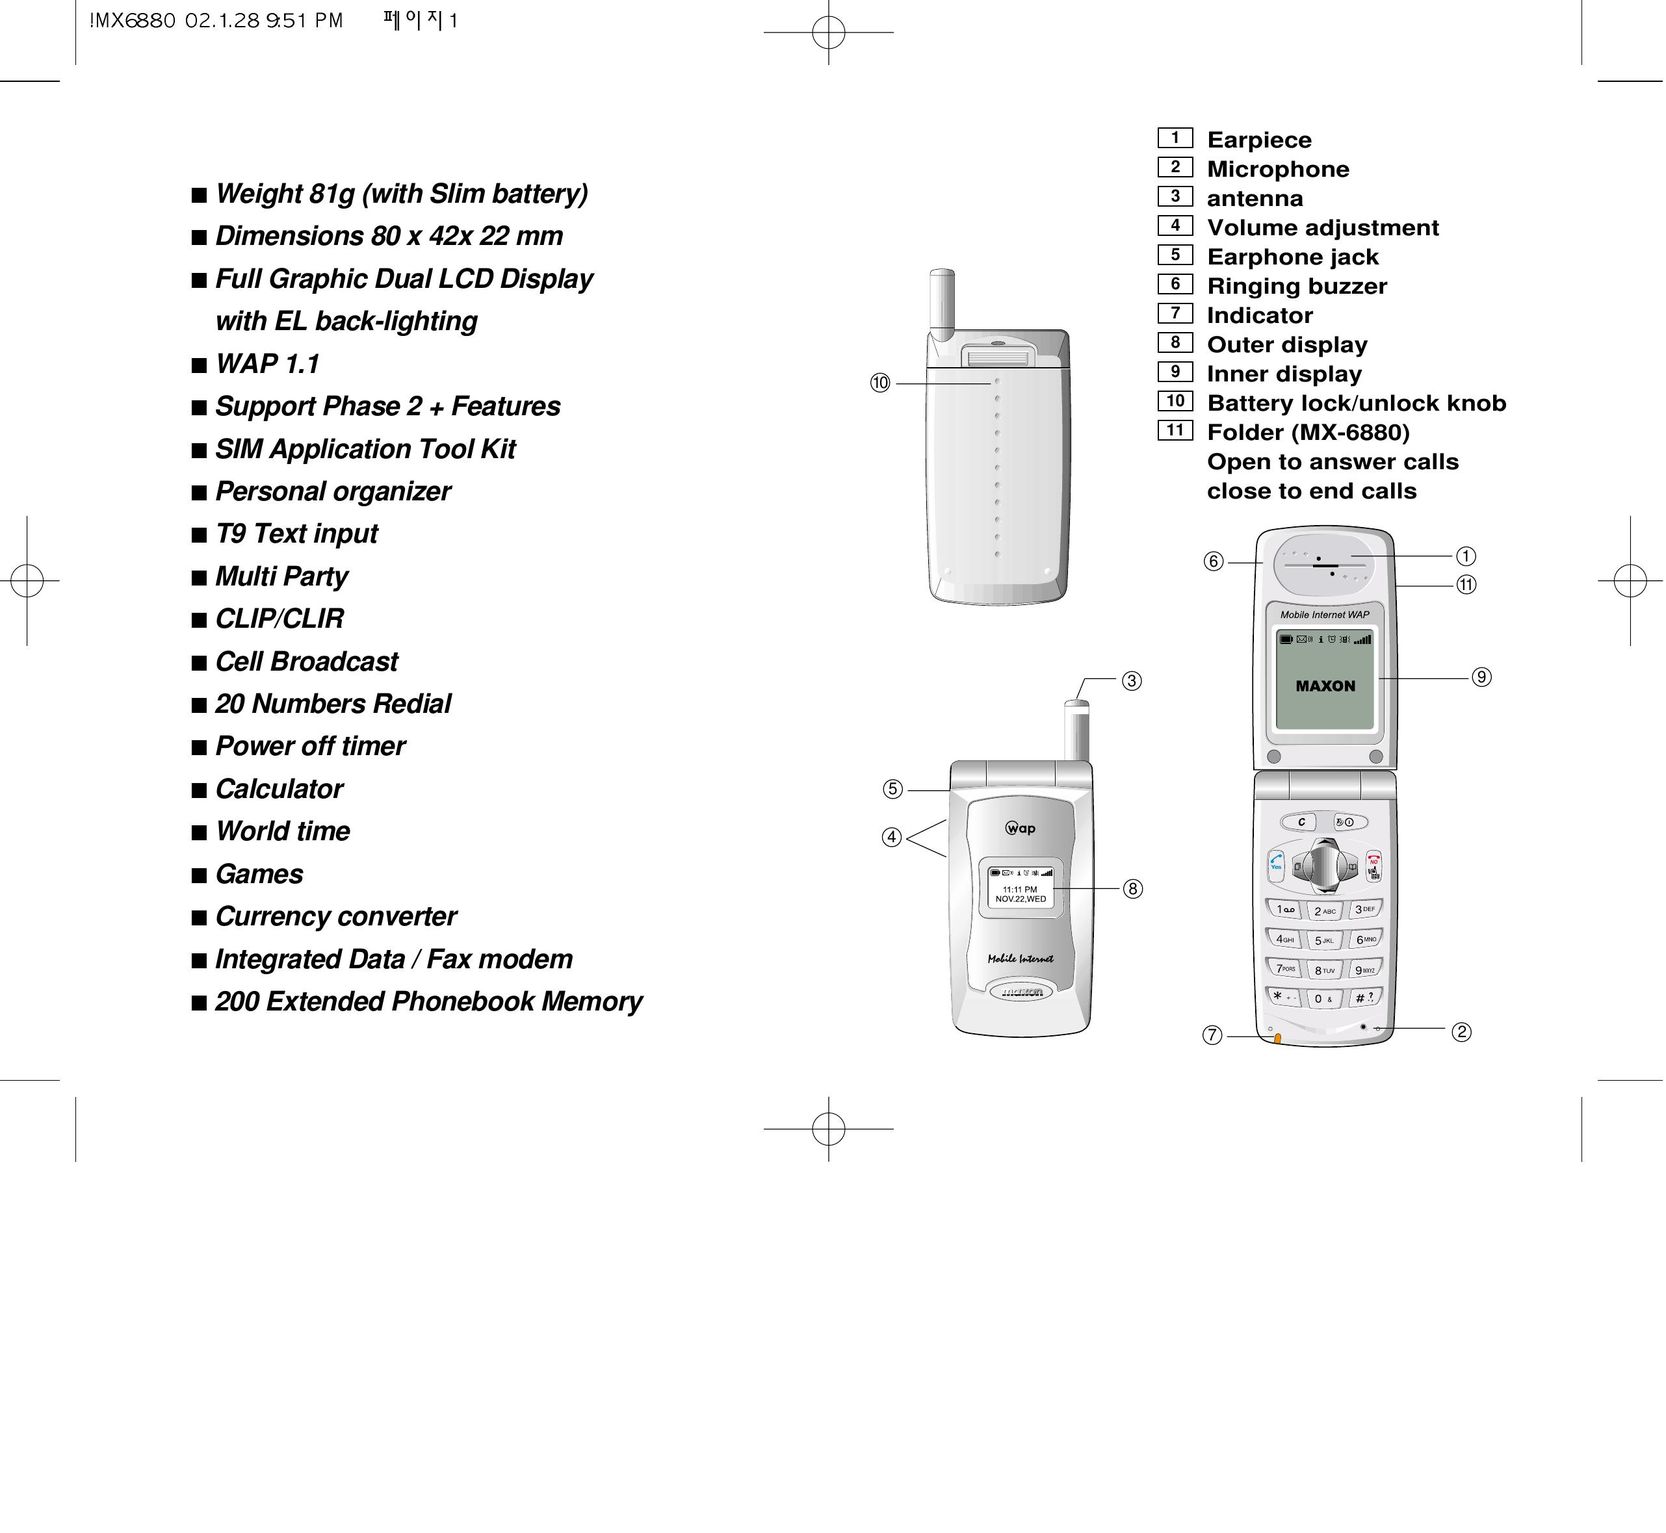 Maxon Telecom MX-6880 Cell Phone User Manual